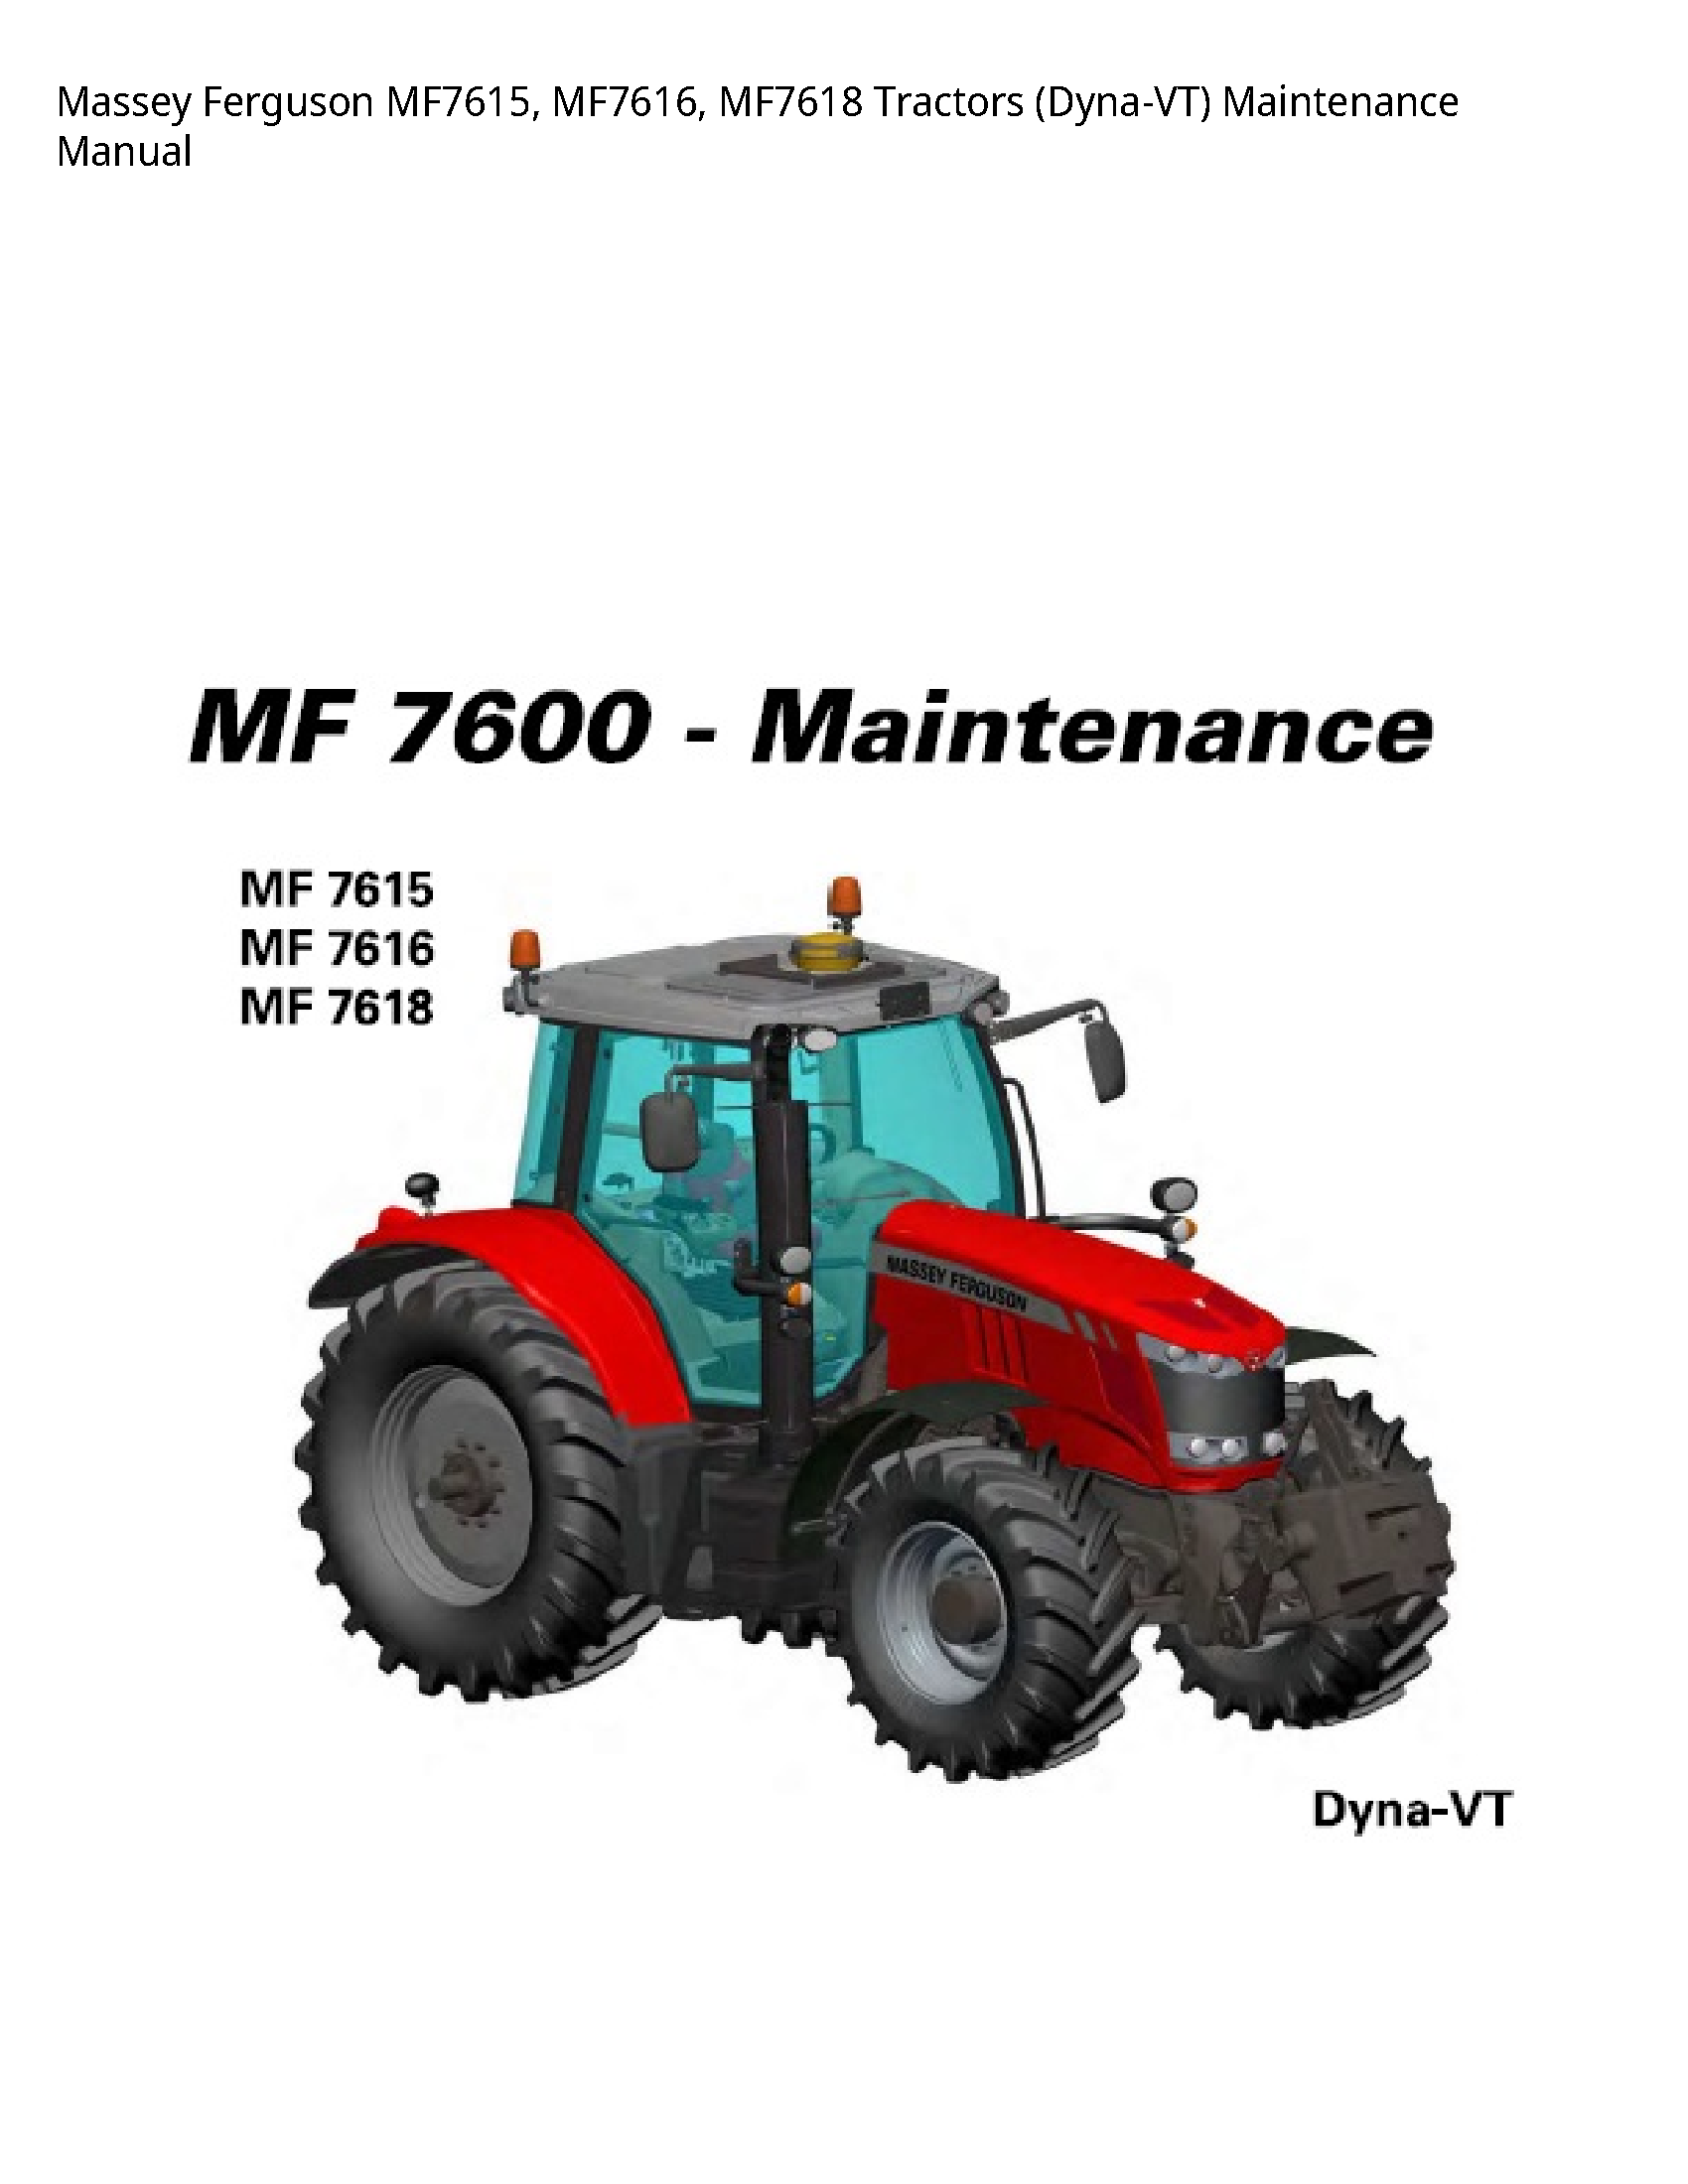 Massey Ferguson MF7615 Tractors (Dyna-VT) Maintenance manual